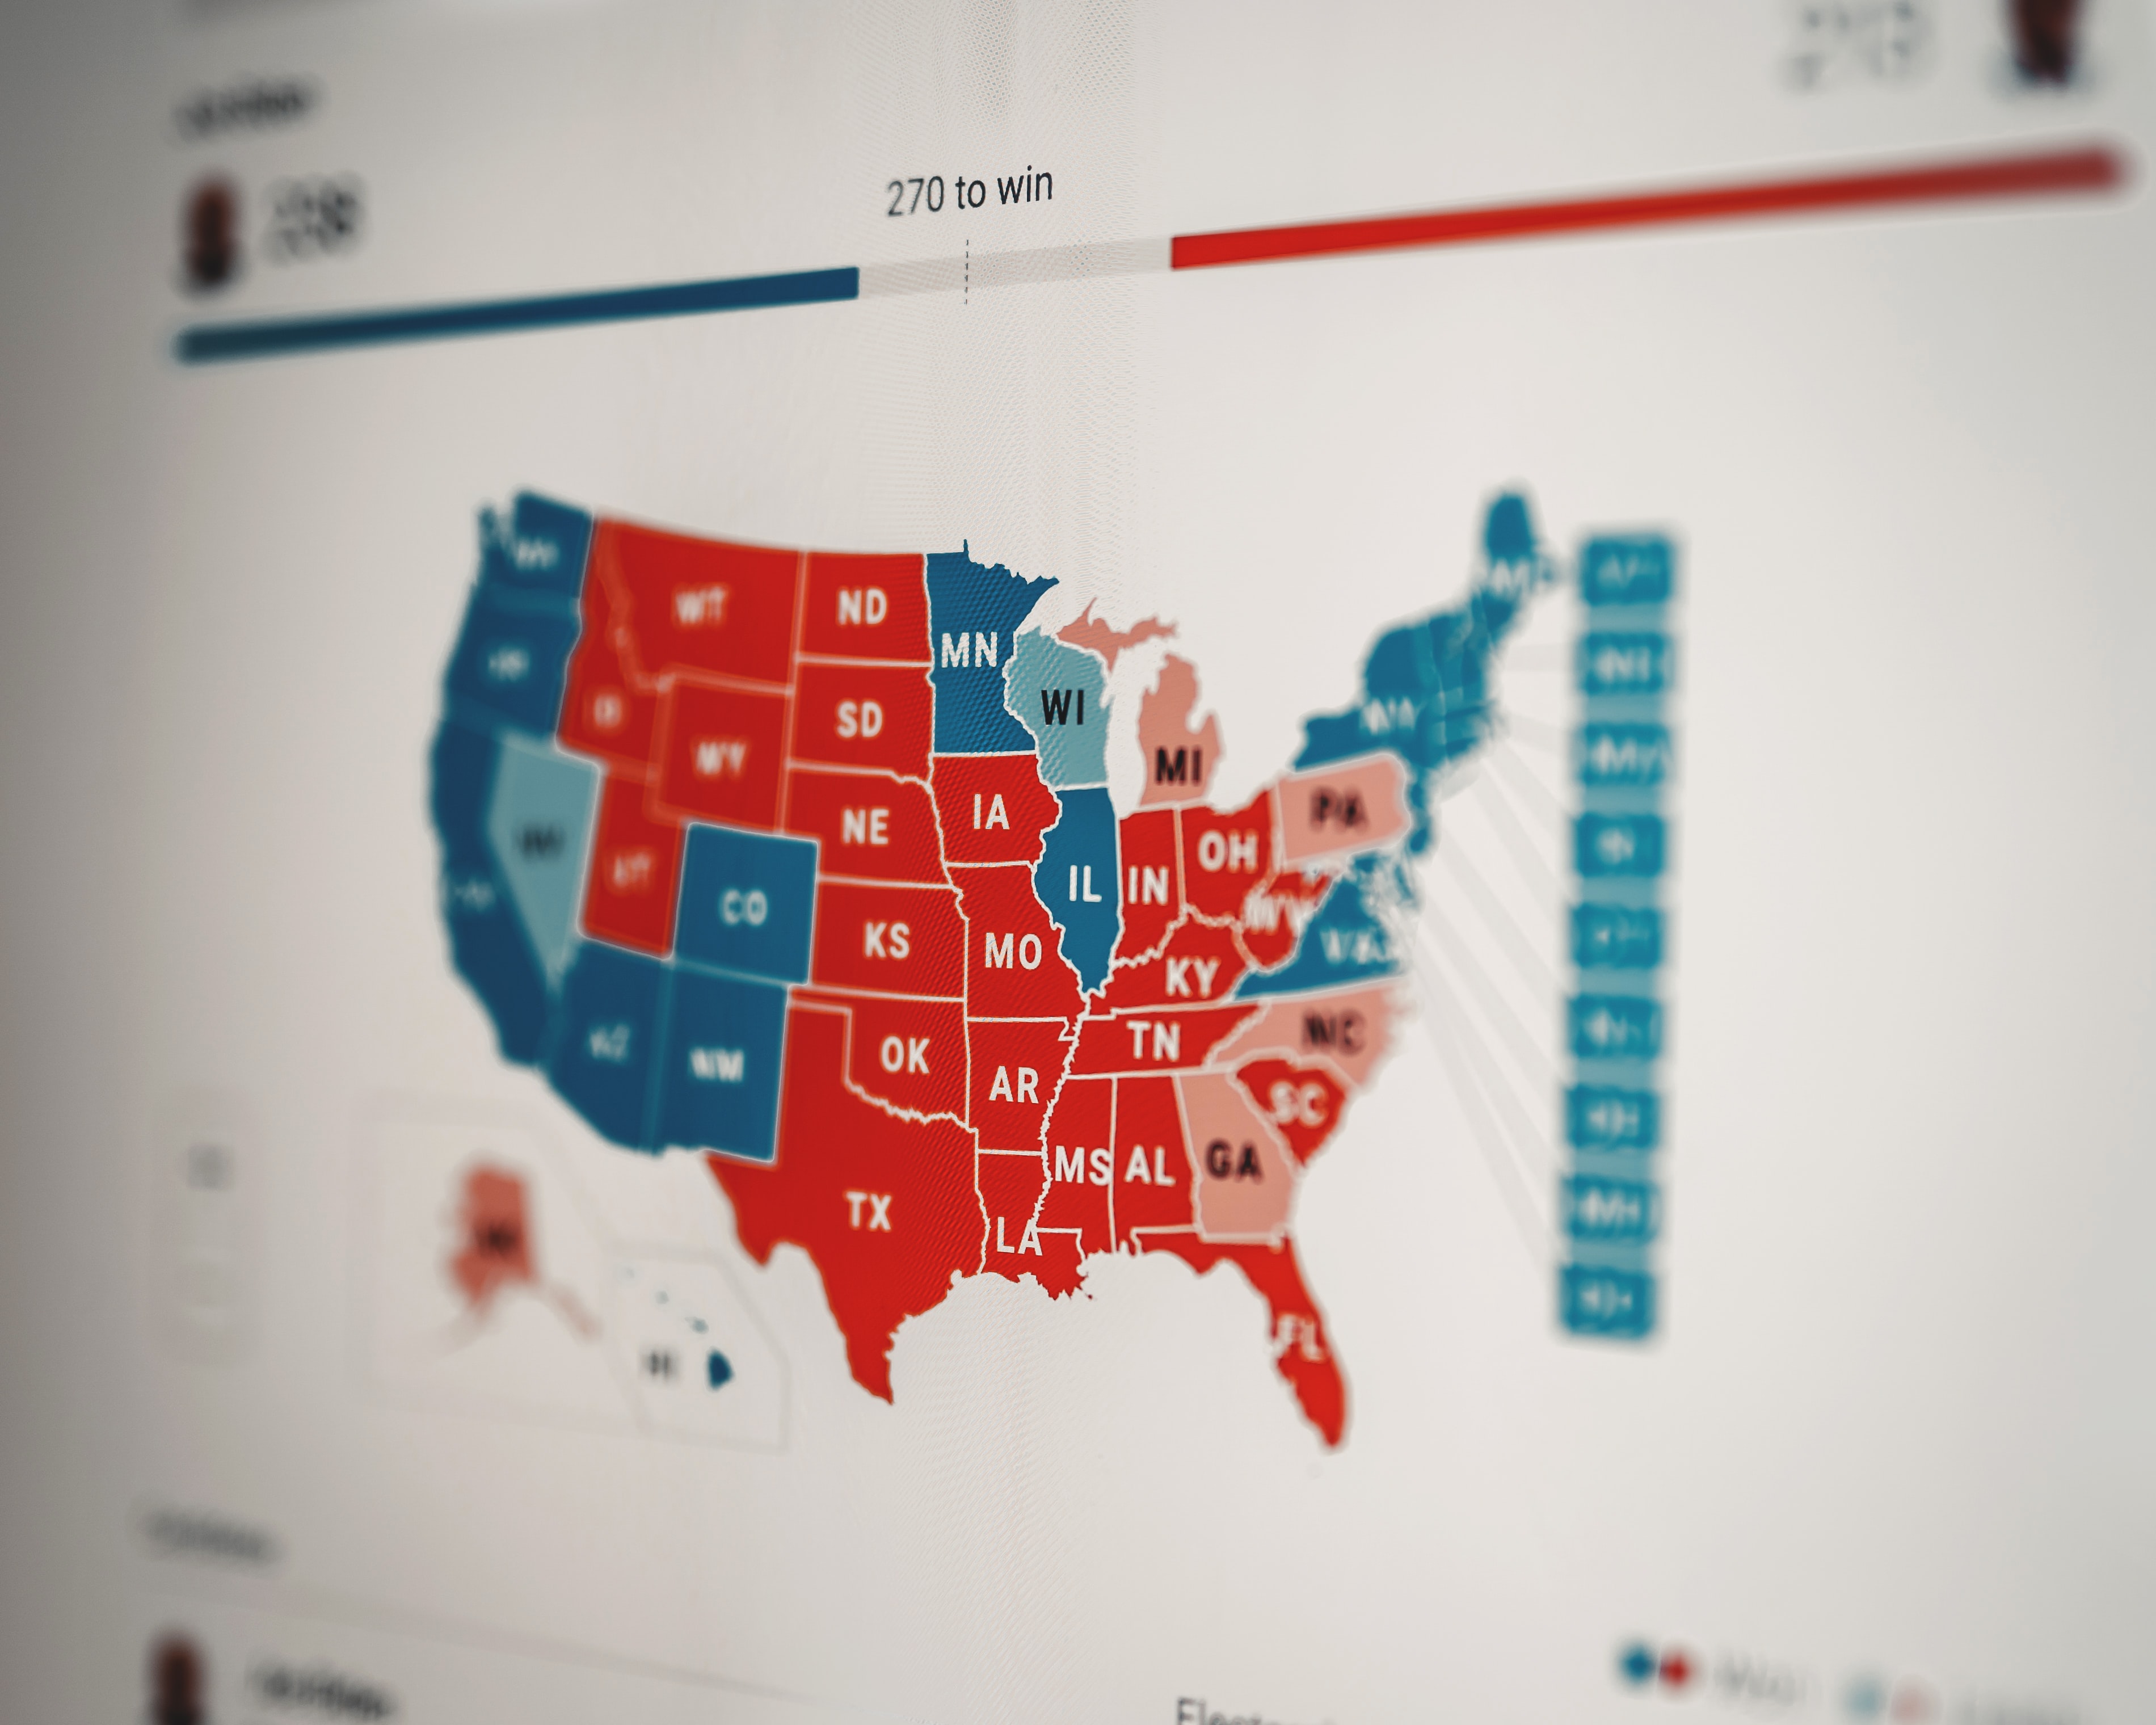 2020 Electoral College Map